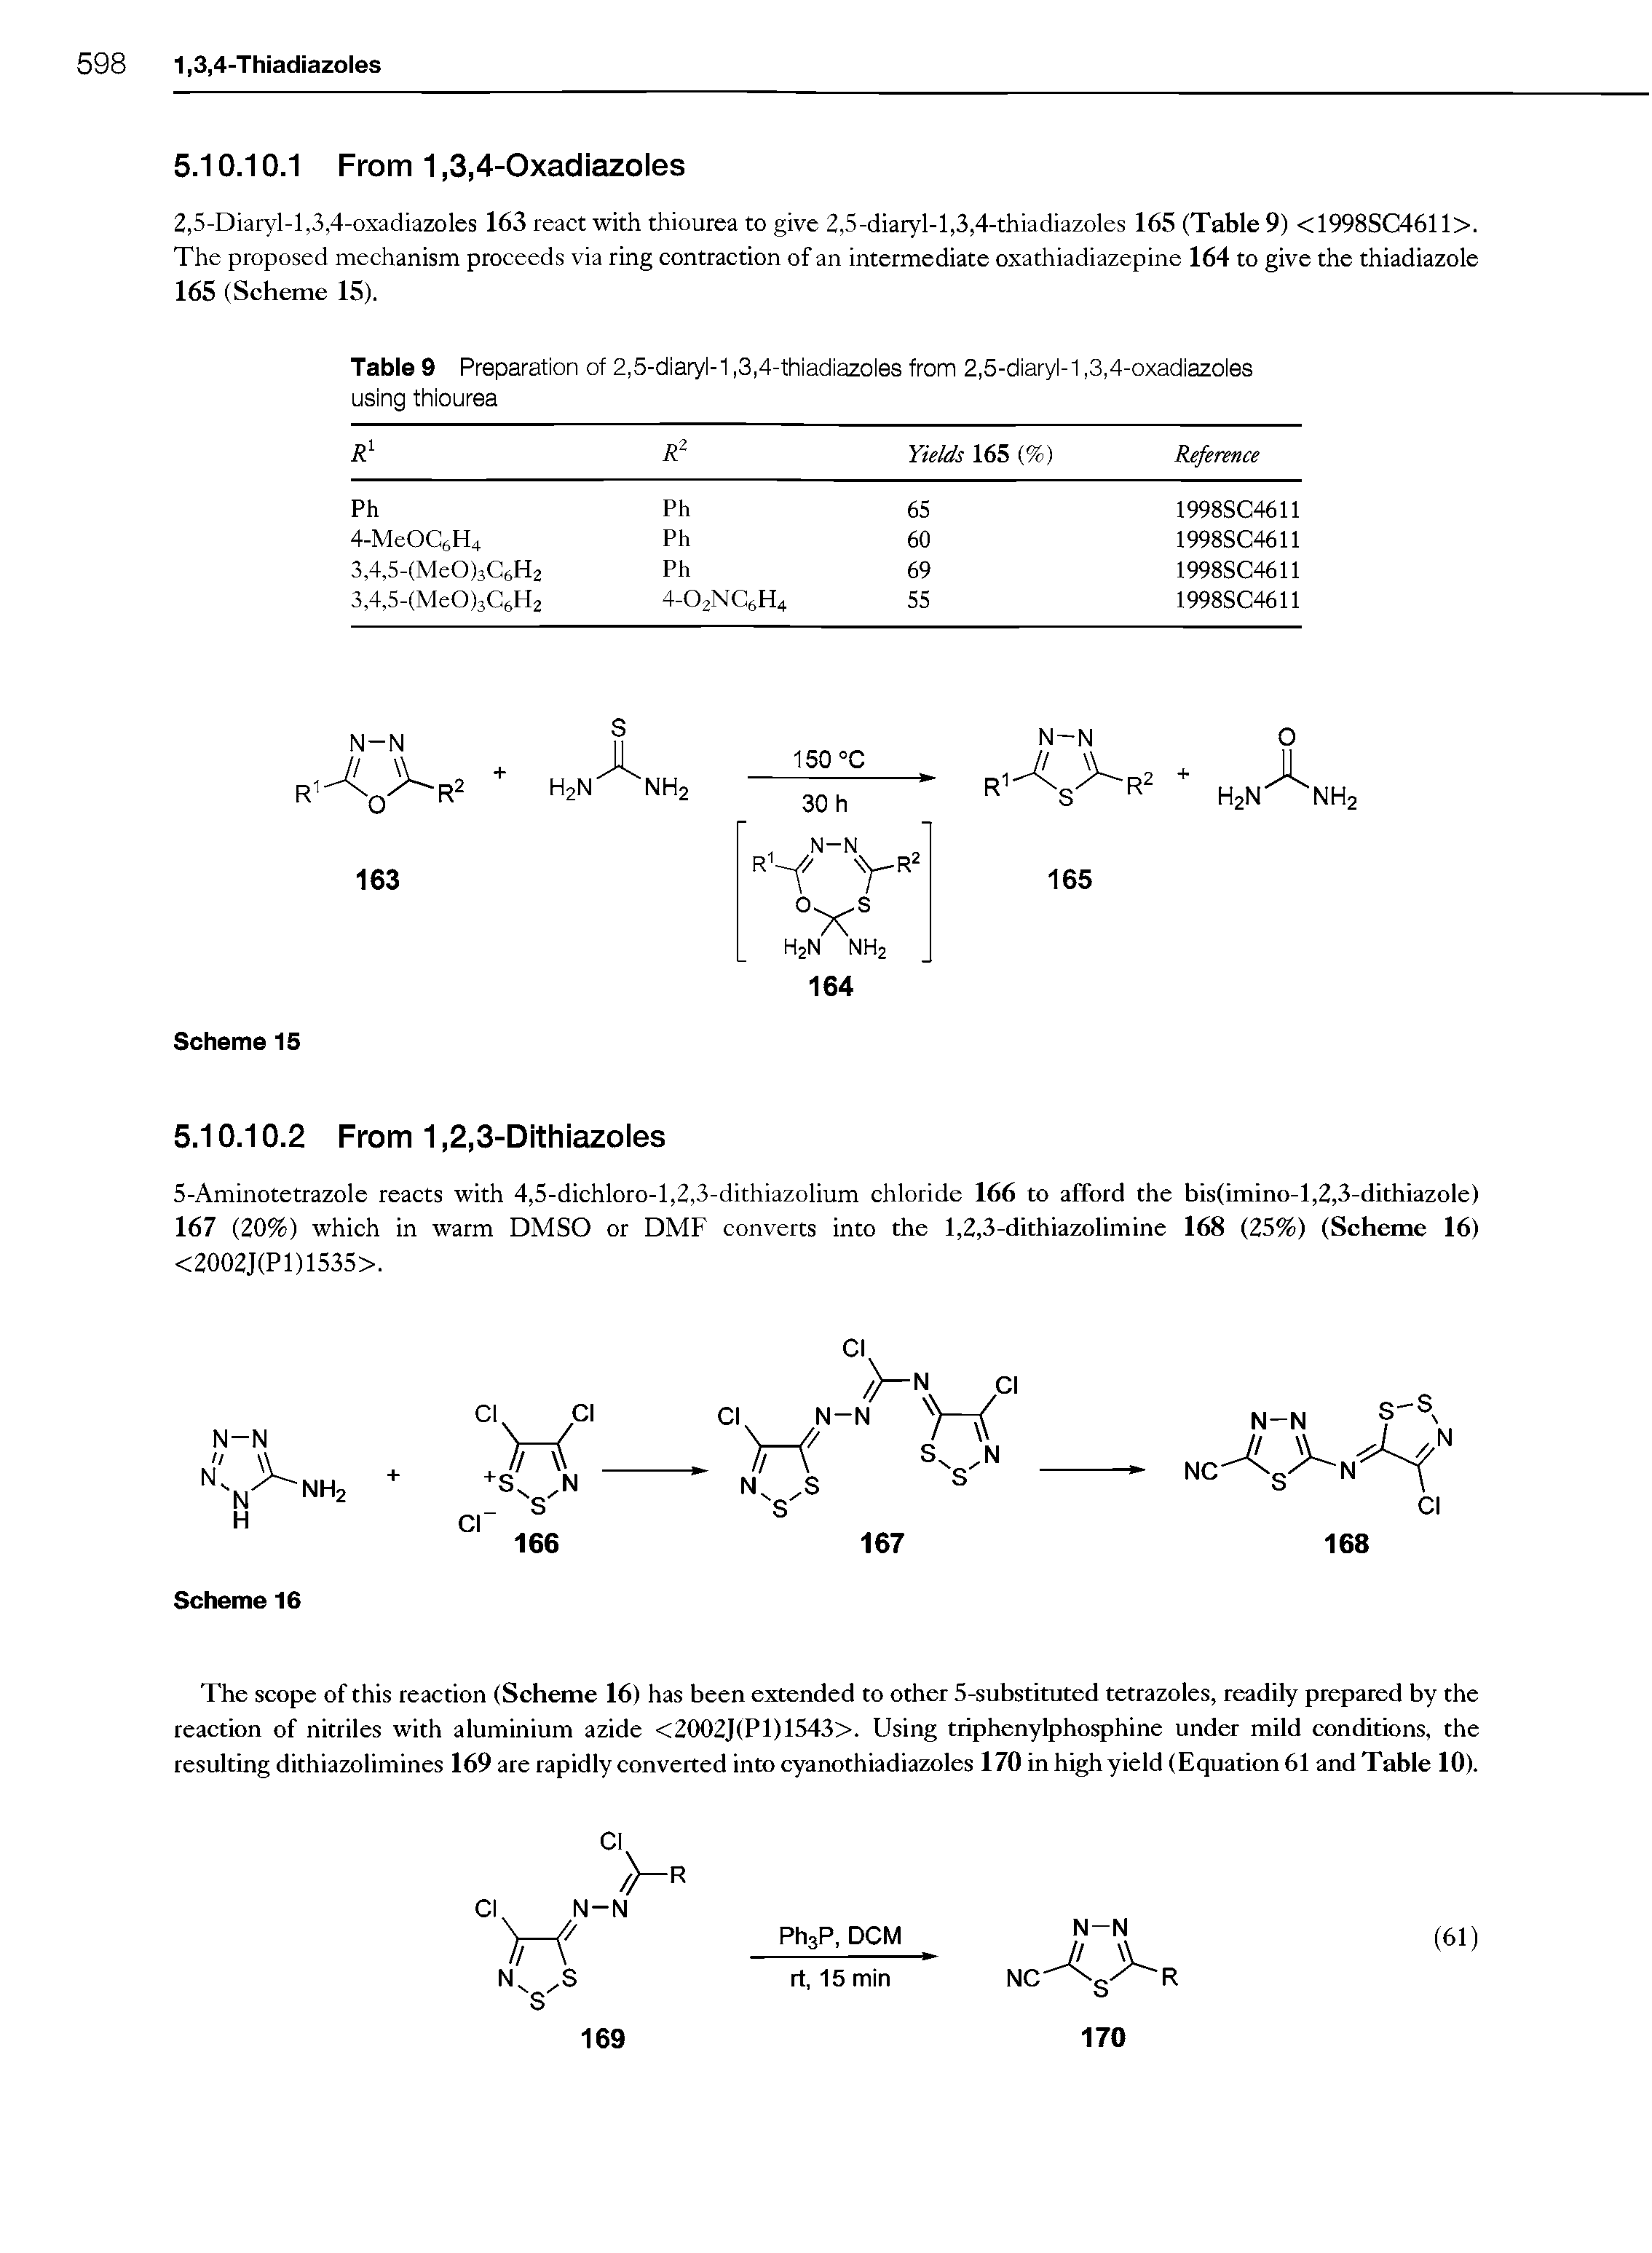 Table 9 Preparation of 2,5-diaryl-1,3,4-thiadiazoles from 2,5-diaryl-1,3,4-oxadiazoles using thiourea...